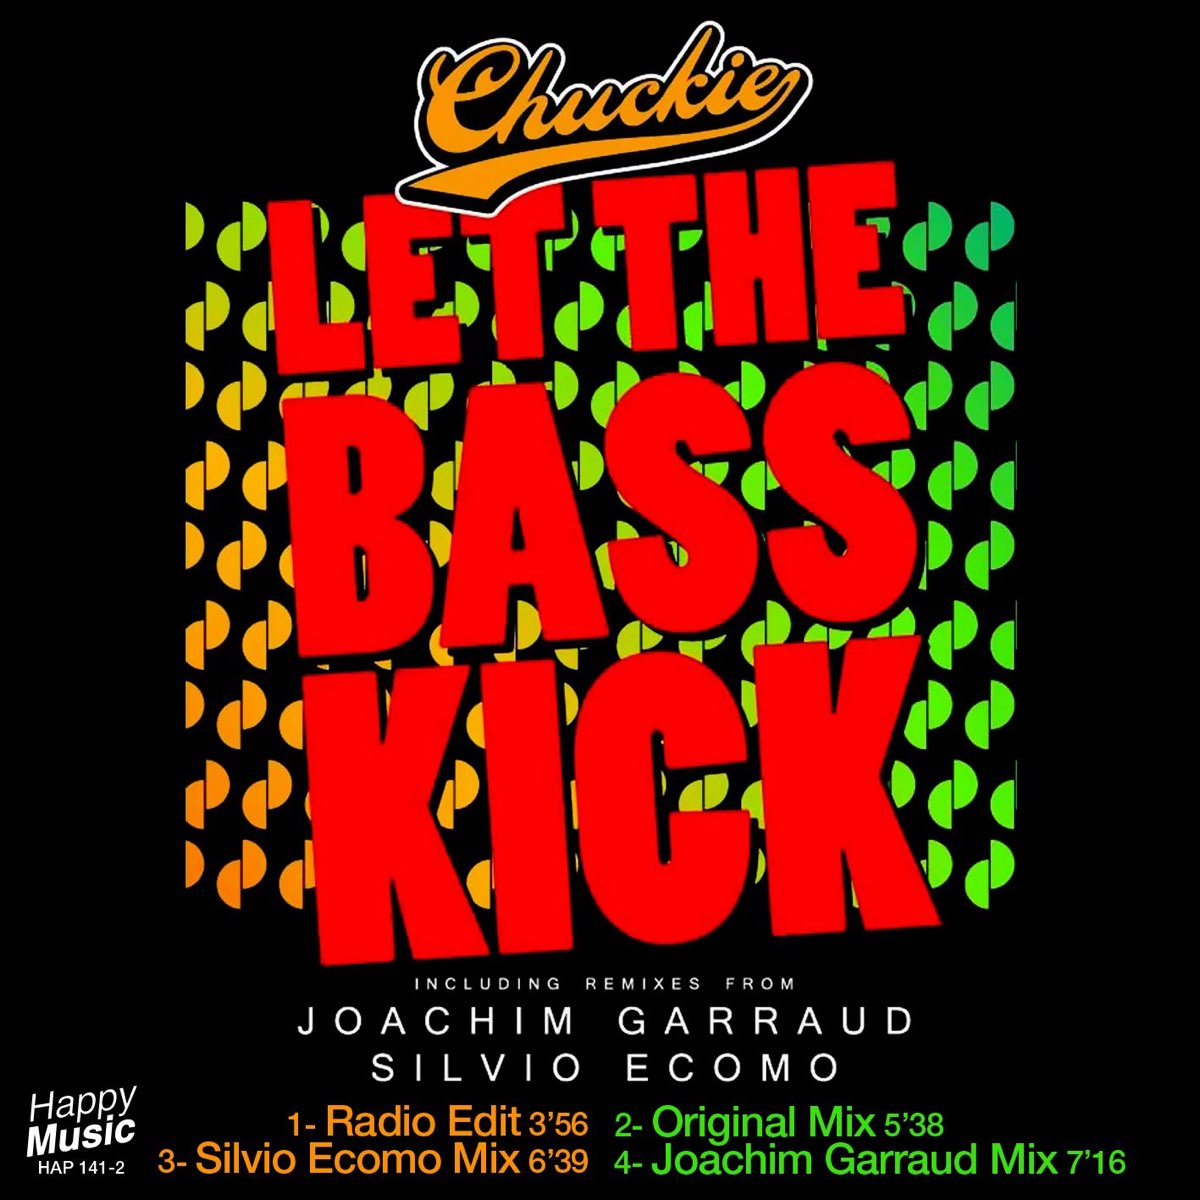 Dj bass kick. Chuckie – Let the Bass Kick. КИК радио. Chuckie LMFAO Let the Bass Kick in Miami Majestic. Let the Bass Kick sickmode.